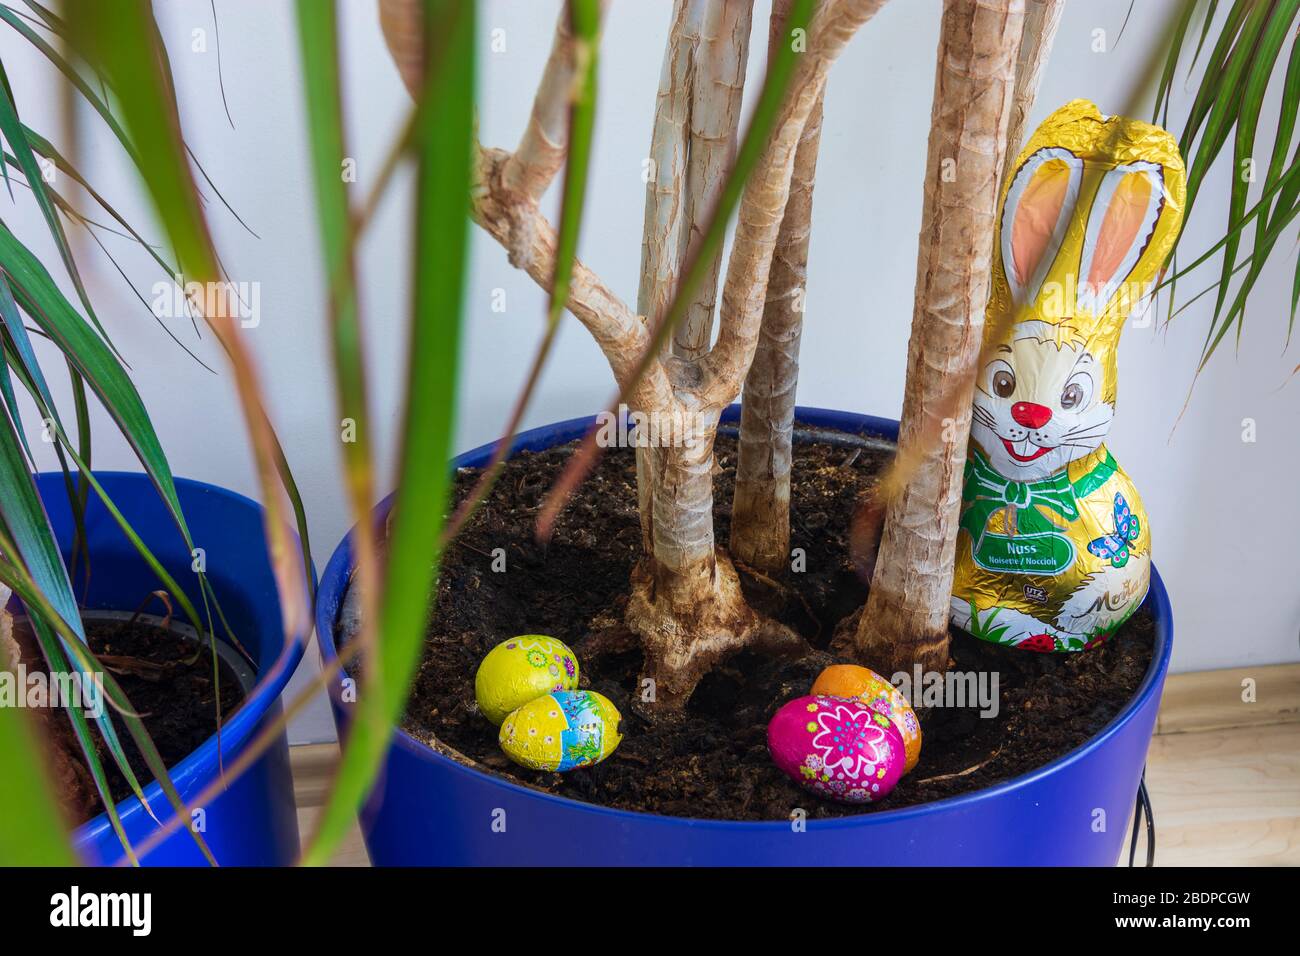 Ostereiersuche, Osterhase in Zeiten von Corona Virus - Easter egg hunt, Easter bunny in times of Corona Virus, potted plant Stock Photo